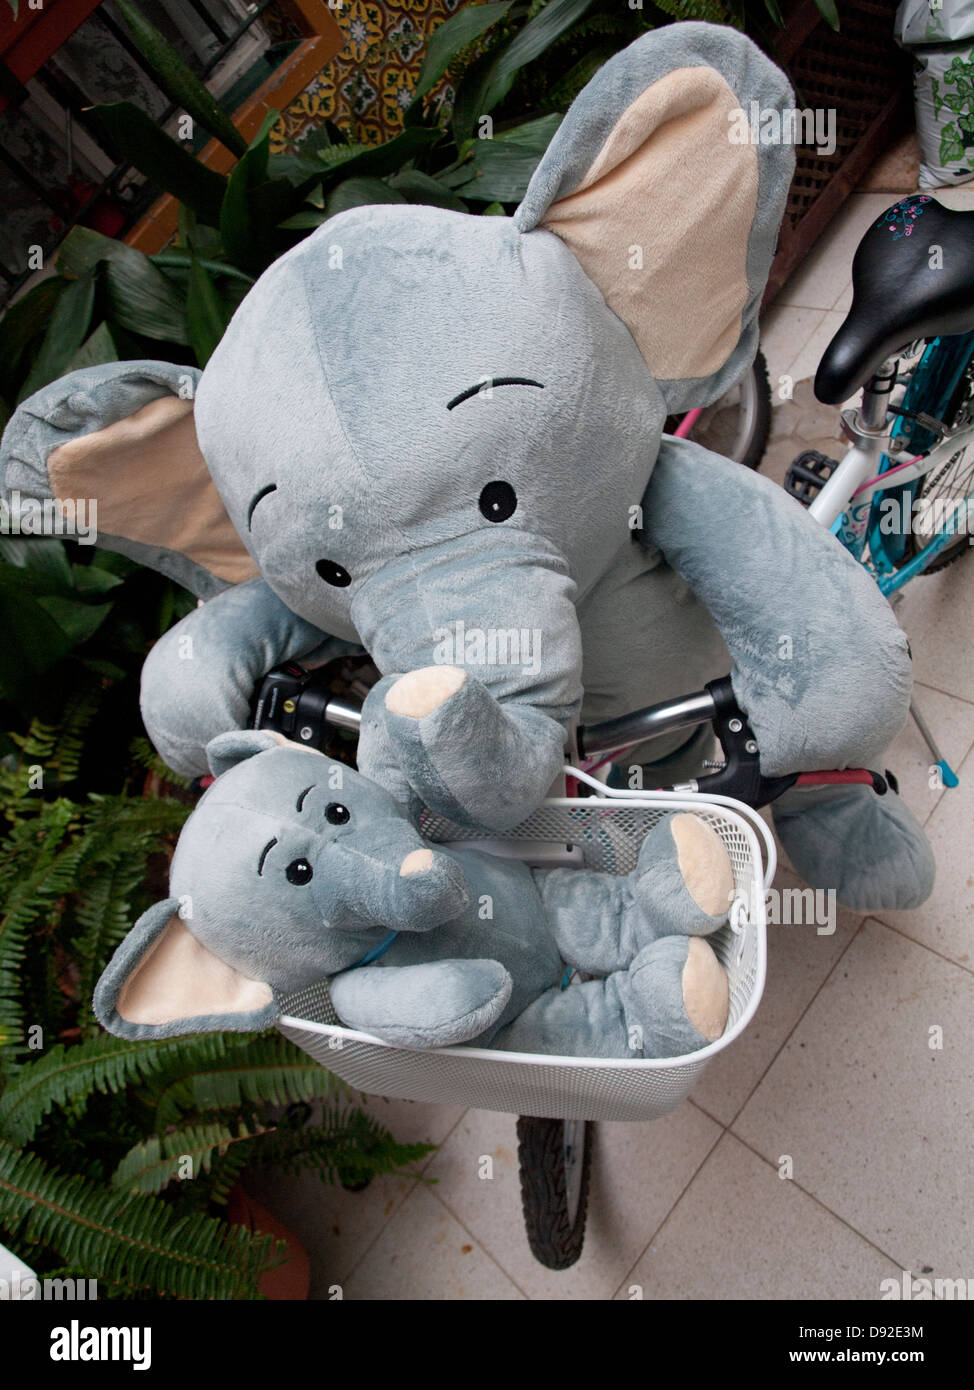 Elefant fahrrad -Fotos und -Bildmaterial in hoher Auflösung – Alamy